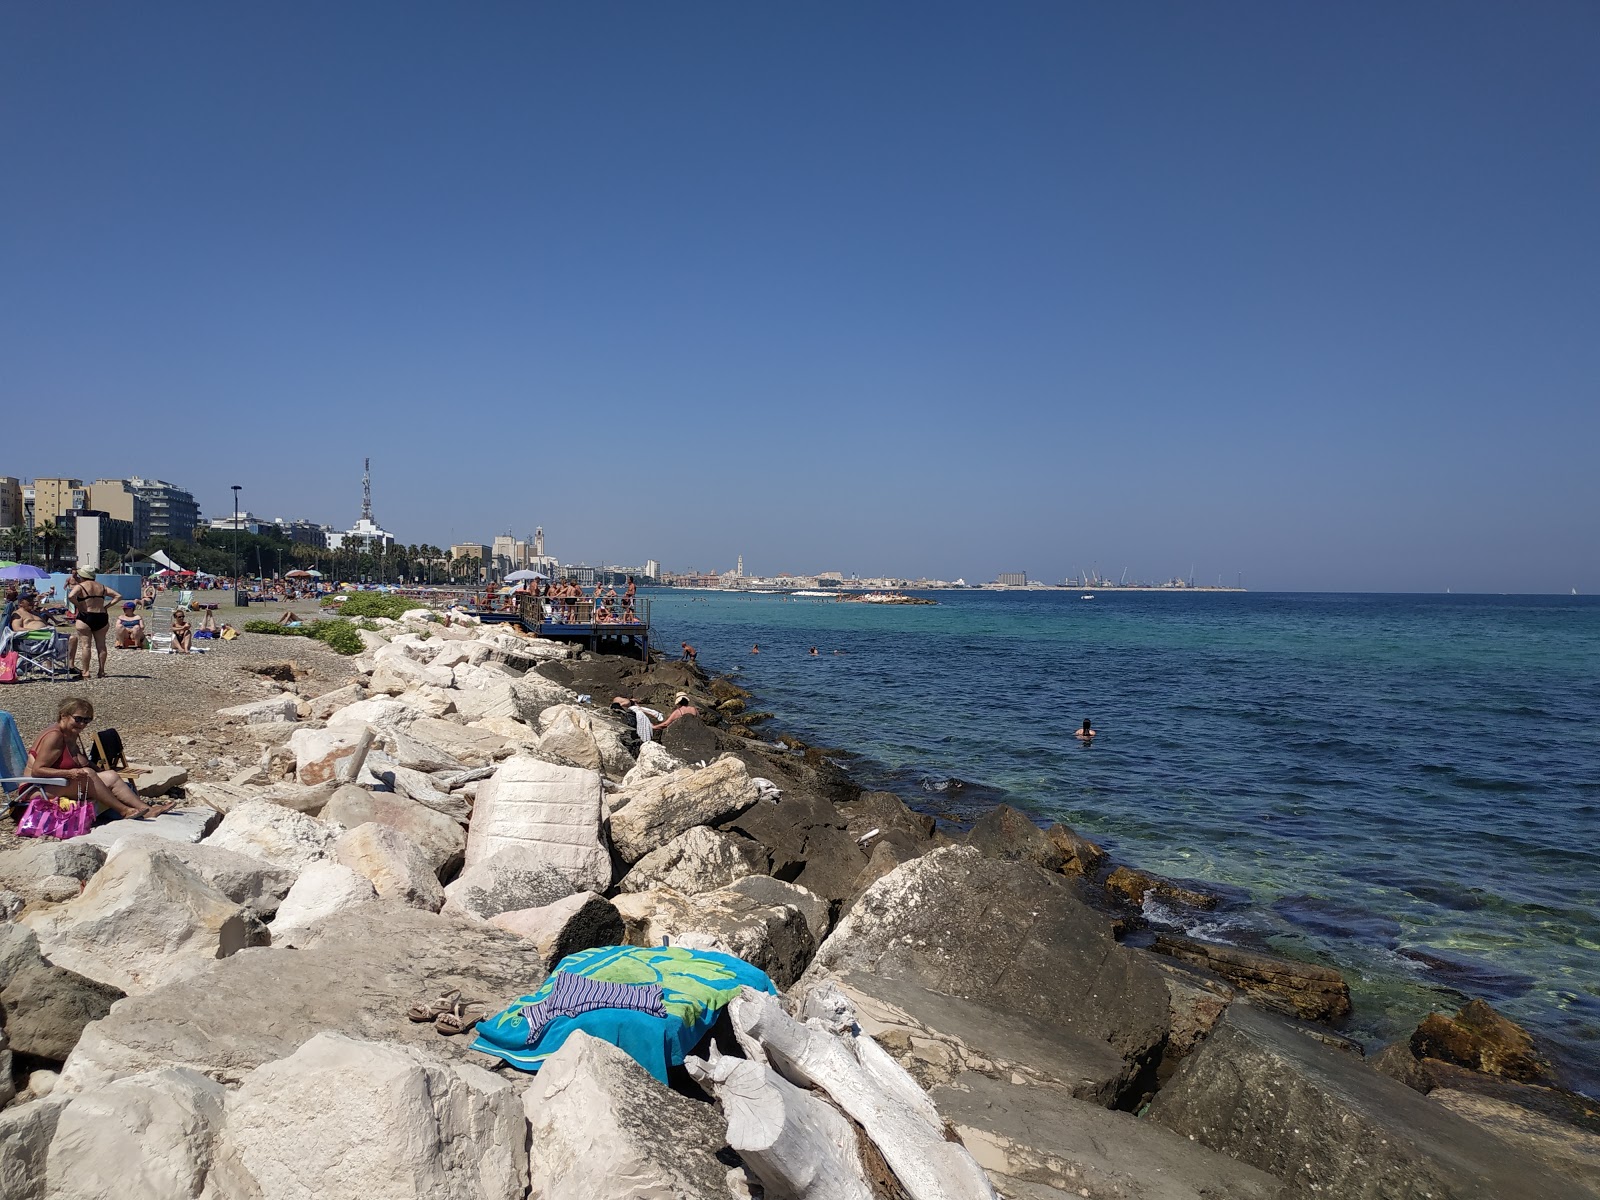 Fotografie cu Spiaggia Pane e Pomodoro - locul popular printre cunoscătorii de relaxare